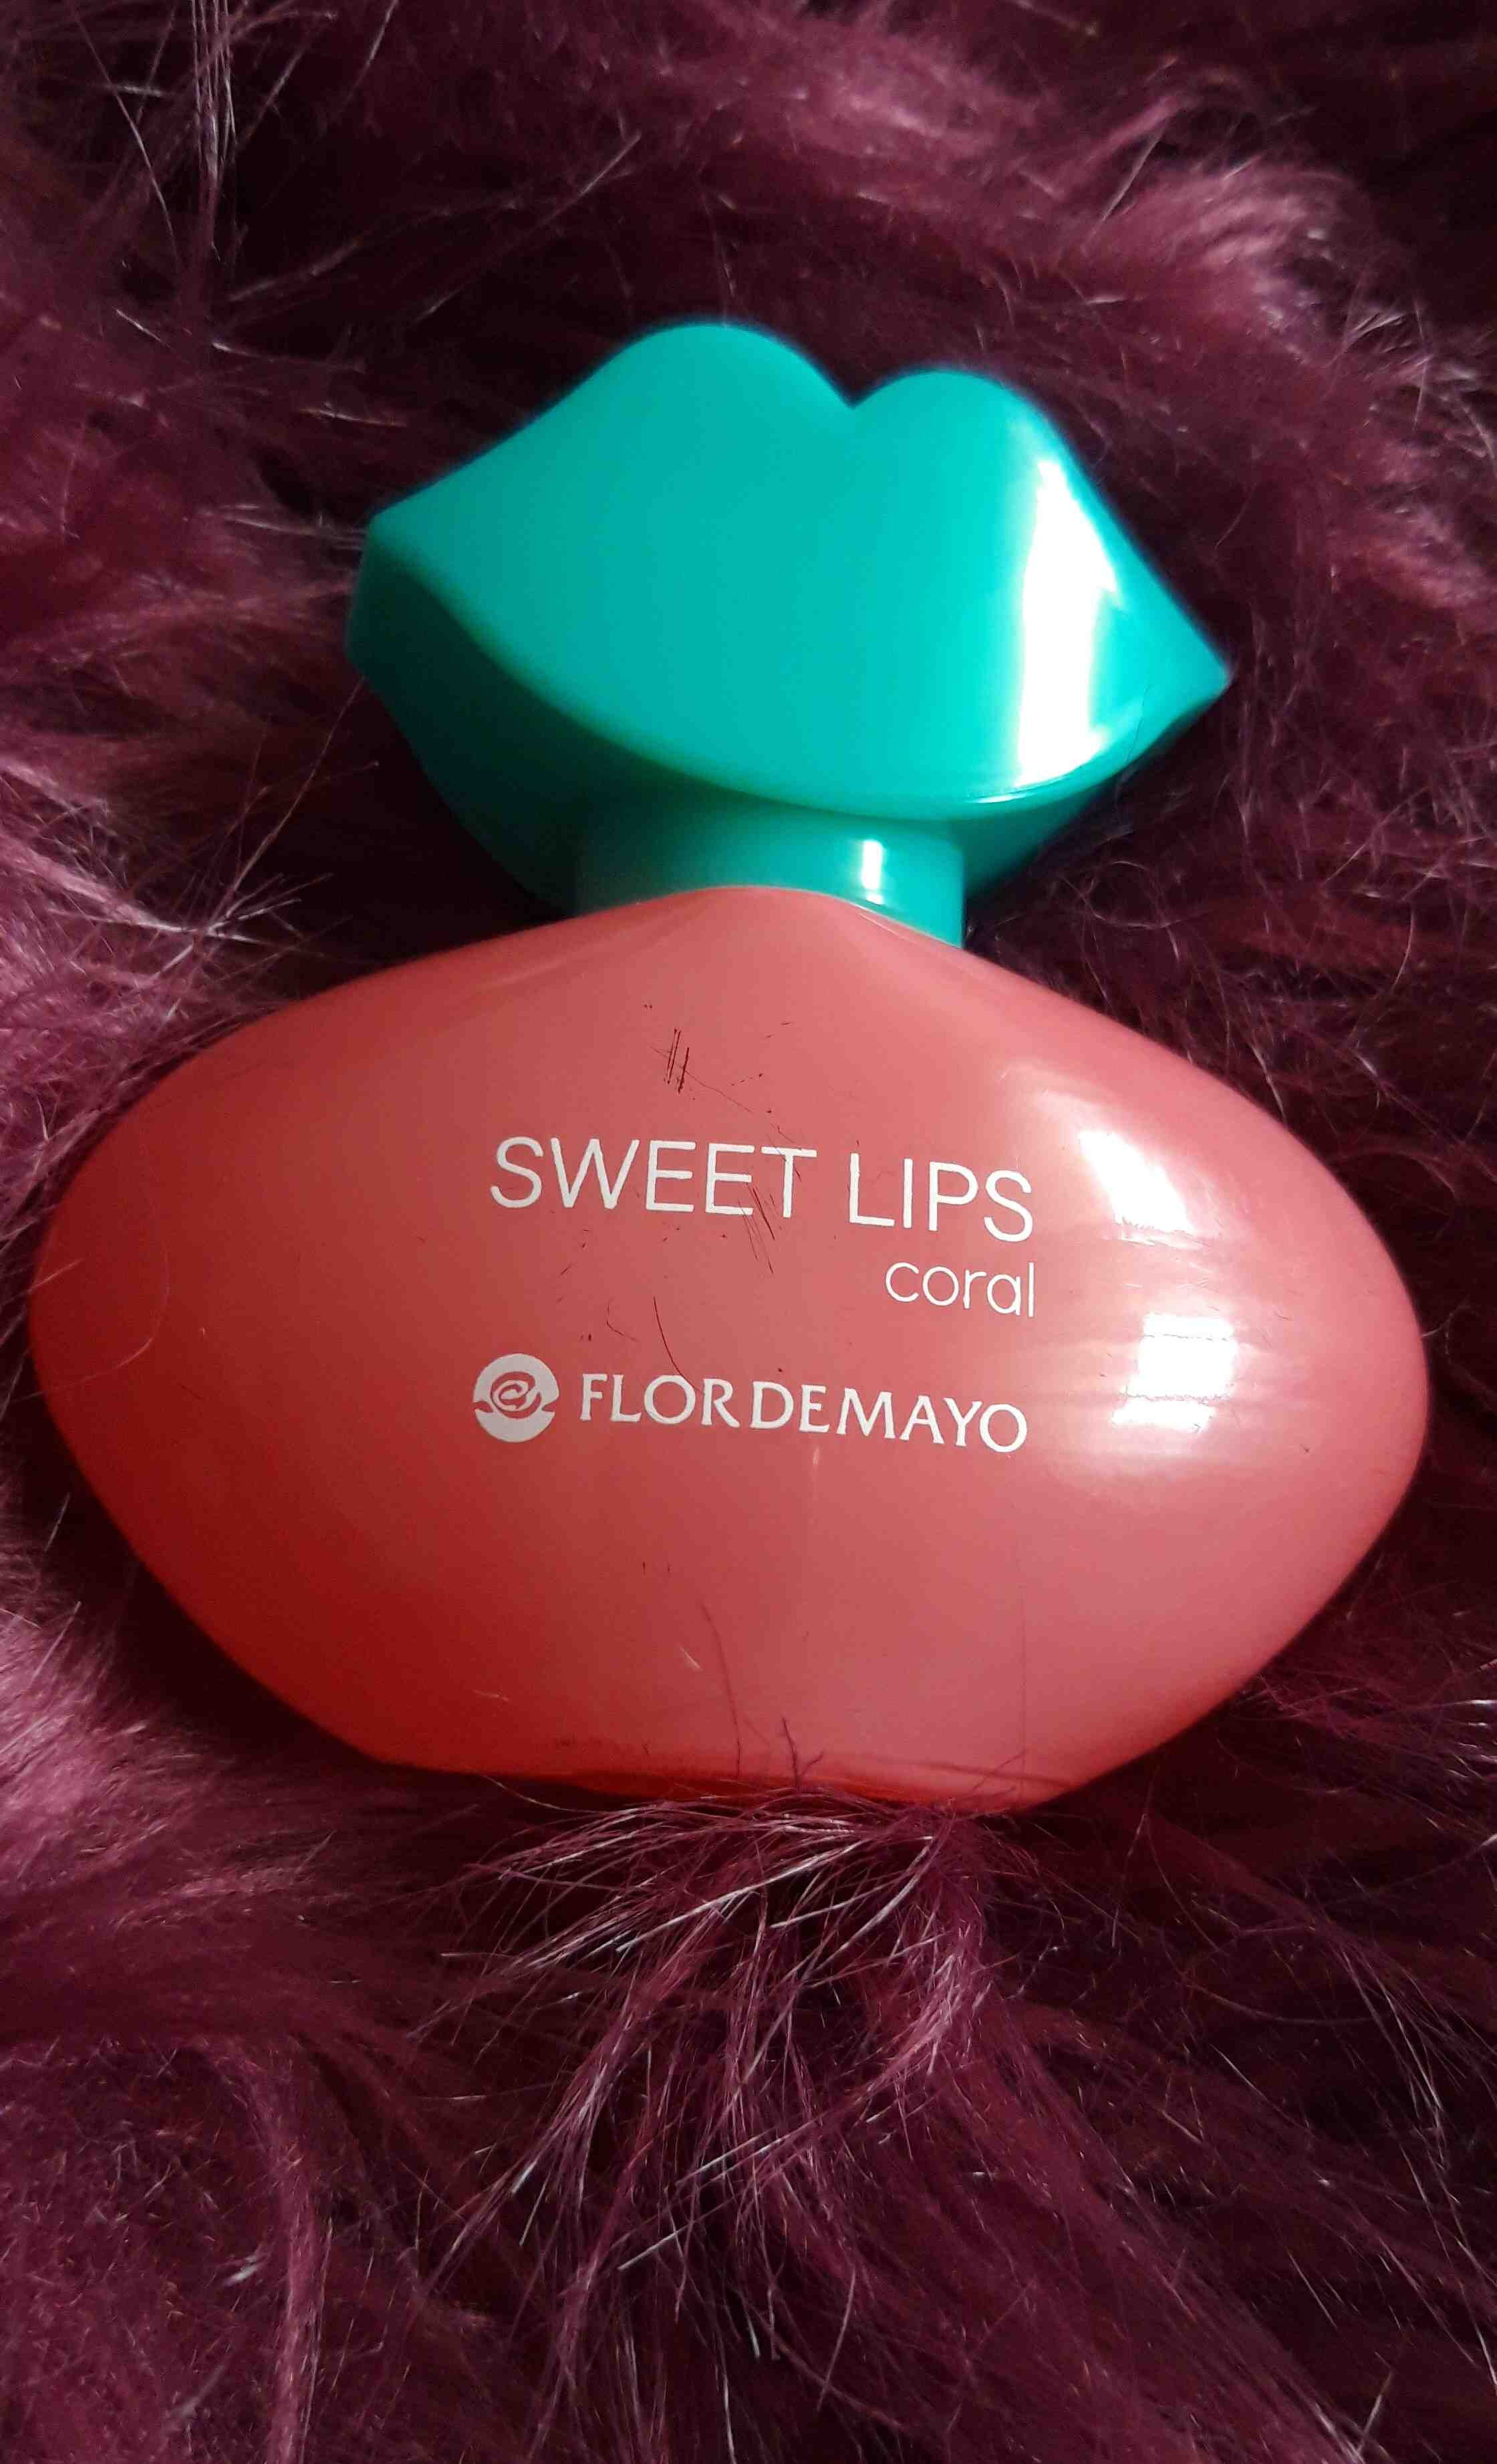 Sweet lips coral flor de mayo - Produit - en